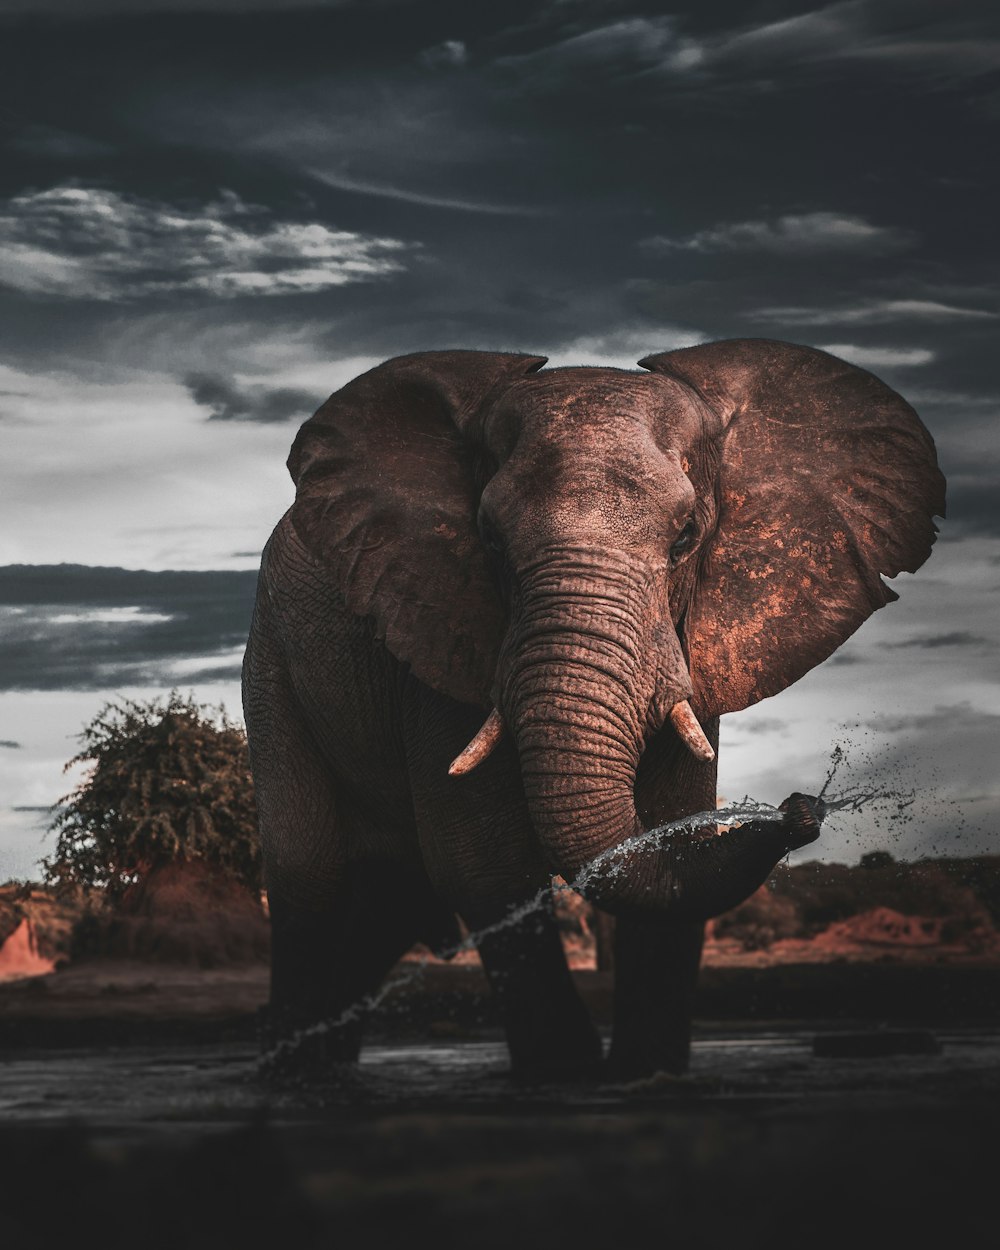 Brauner Elefant steht tagsüber auf braunem Feld